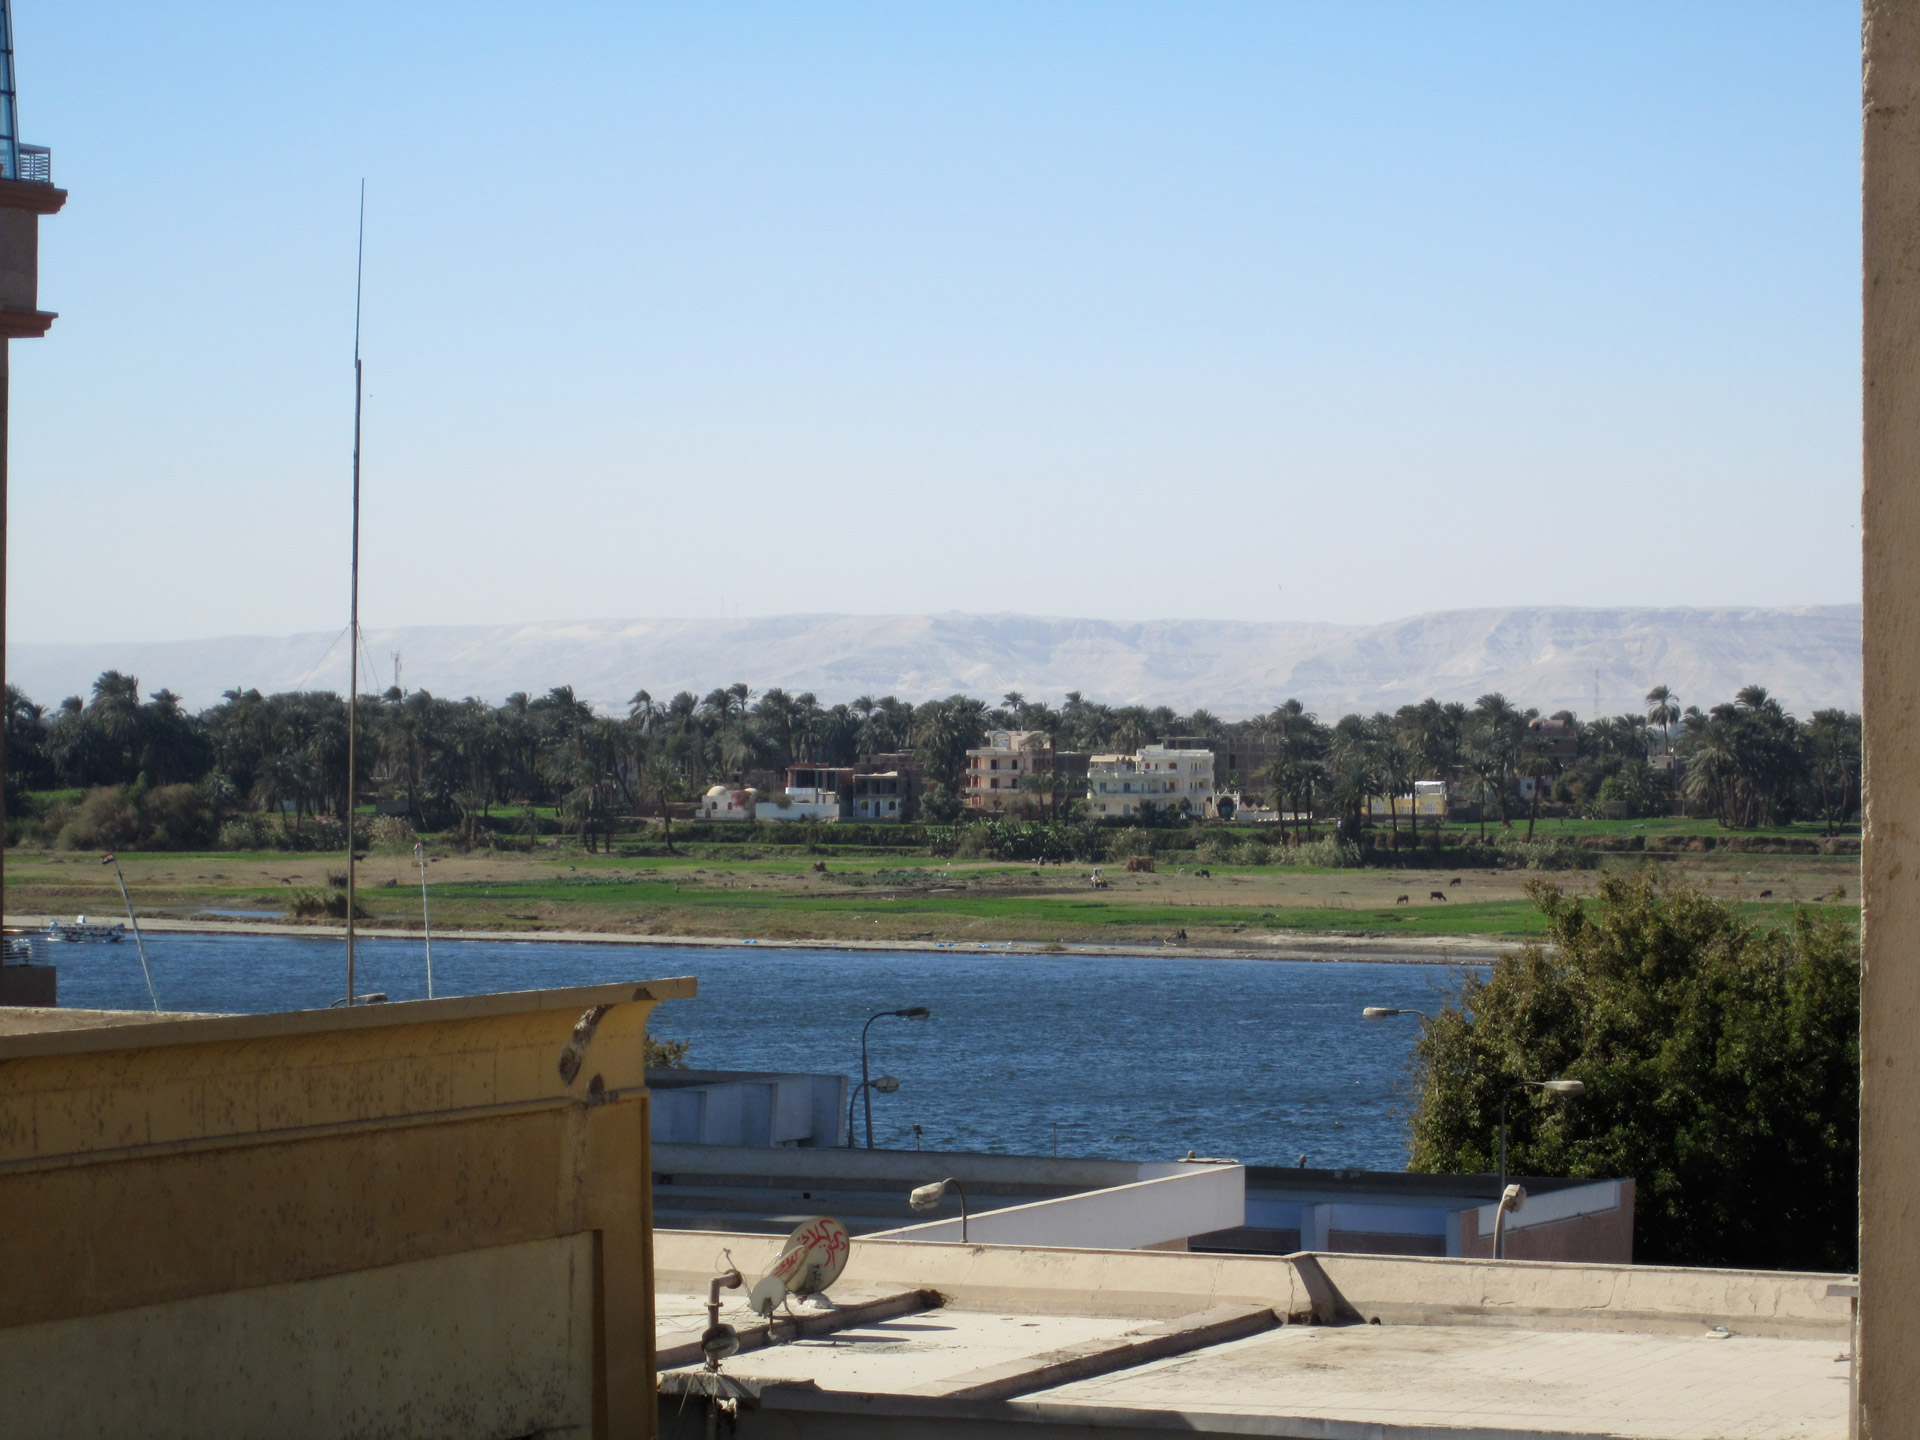 Luxor Nile